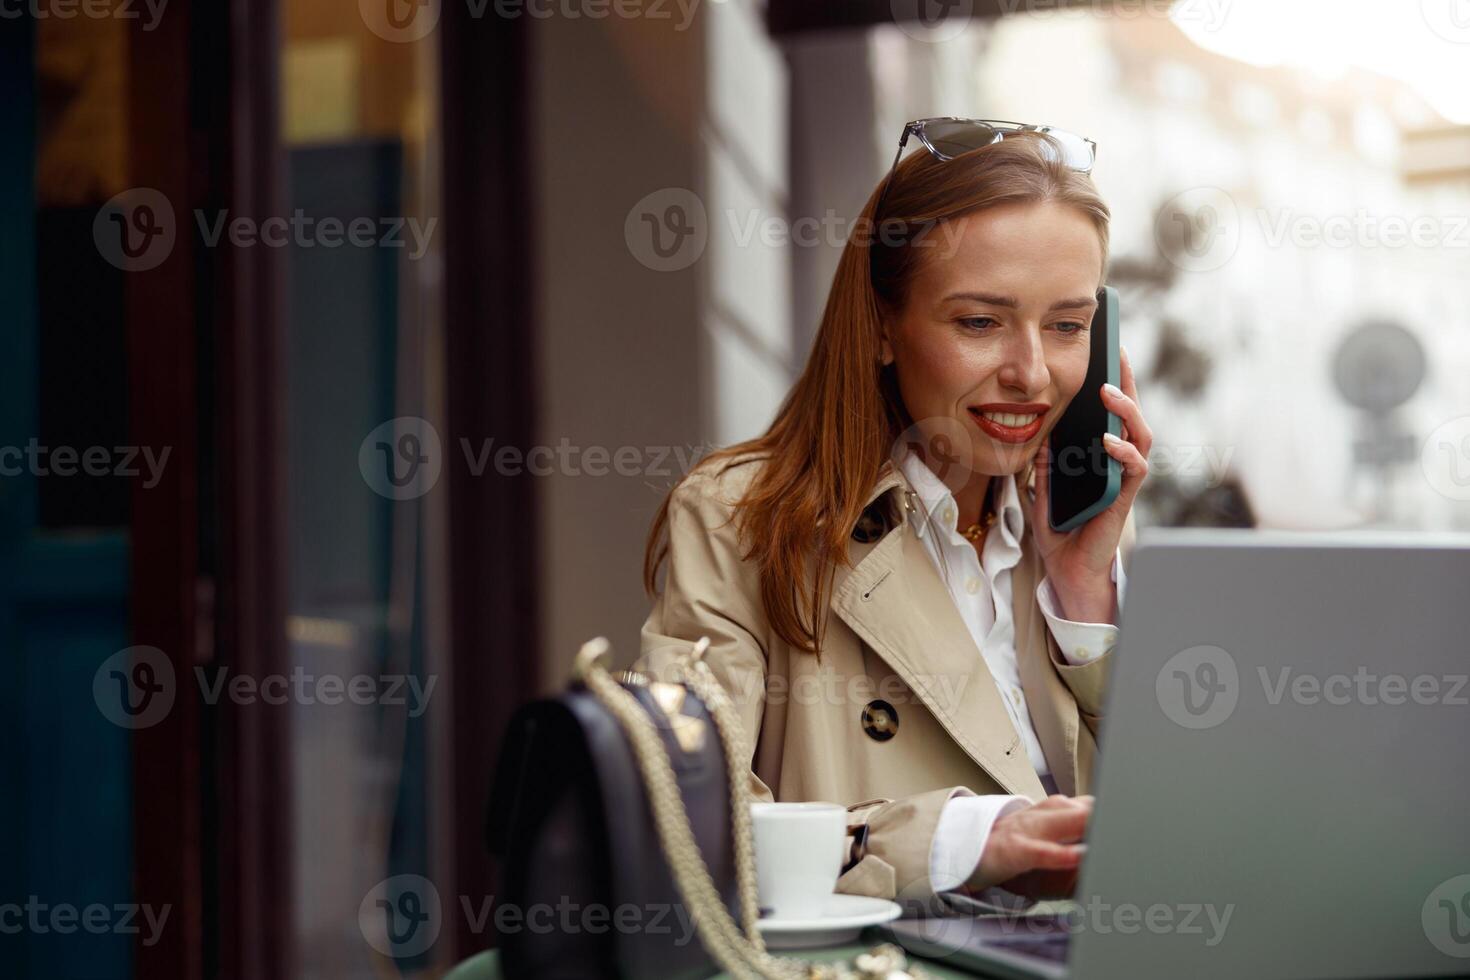 glimlachen Europese zakenvrouw pratend telefoon terwijl werken online zittend Bij buitenshuis cafe terras foto